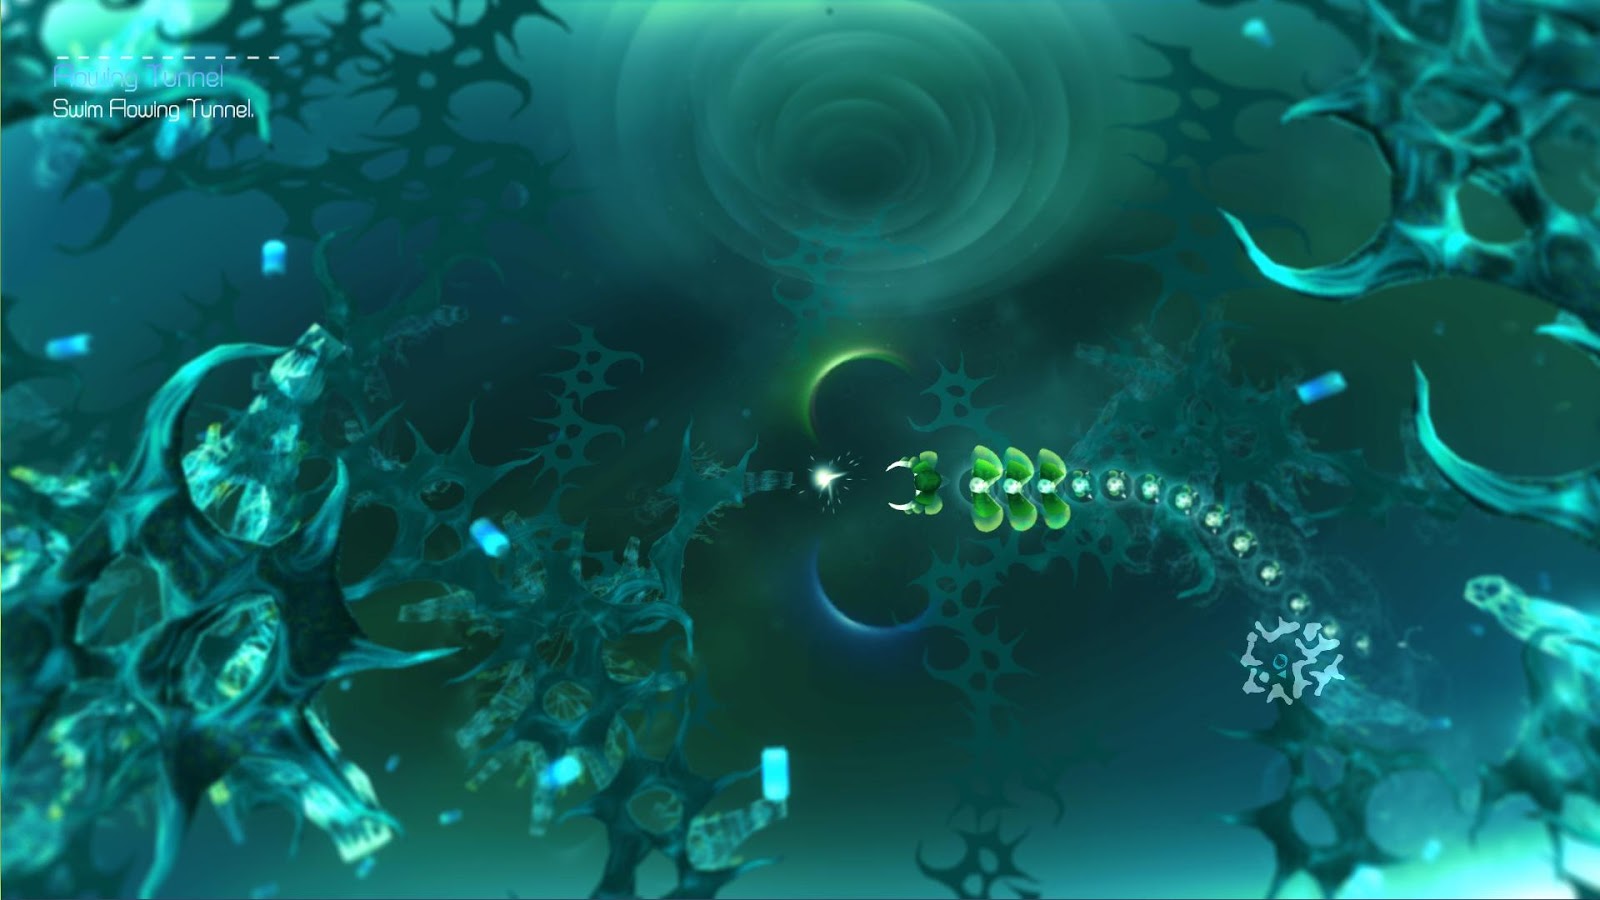    Sparkle 3 Genesis- screenshot  